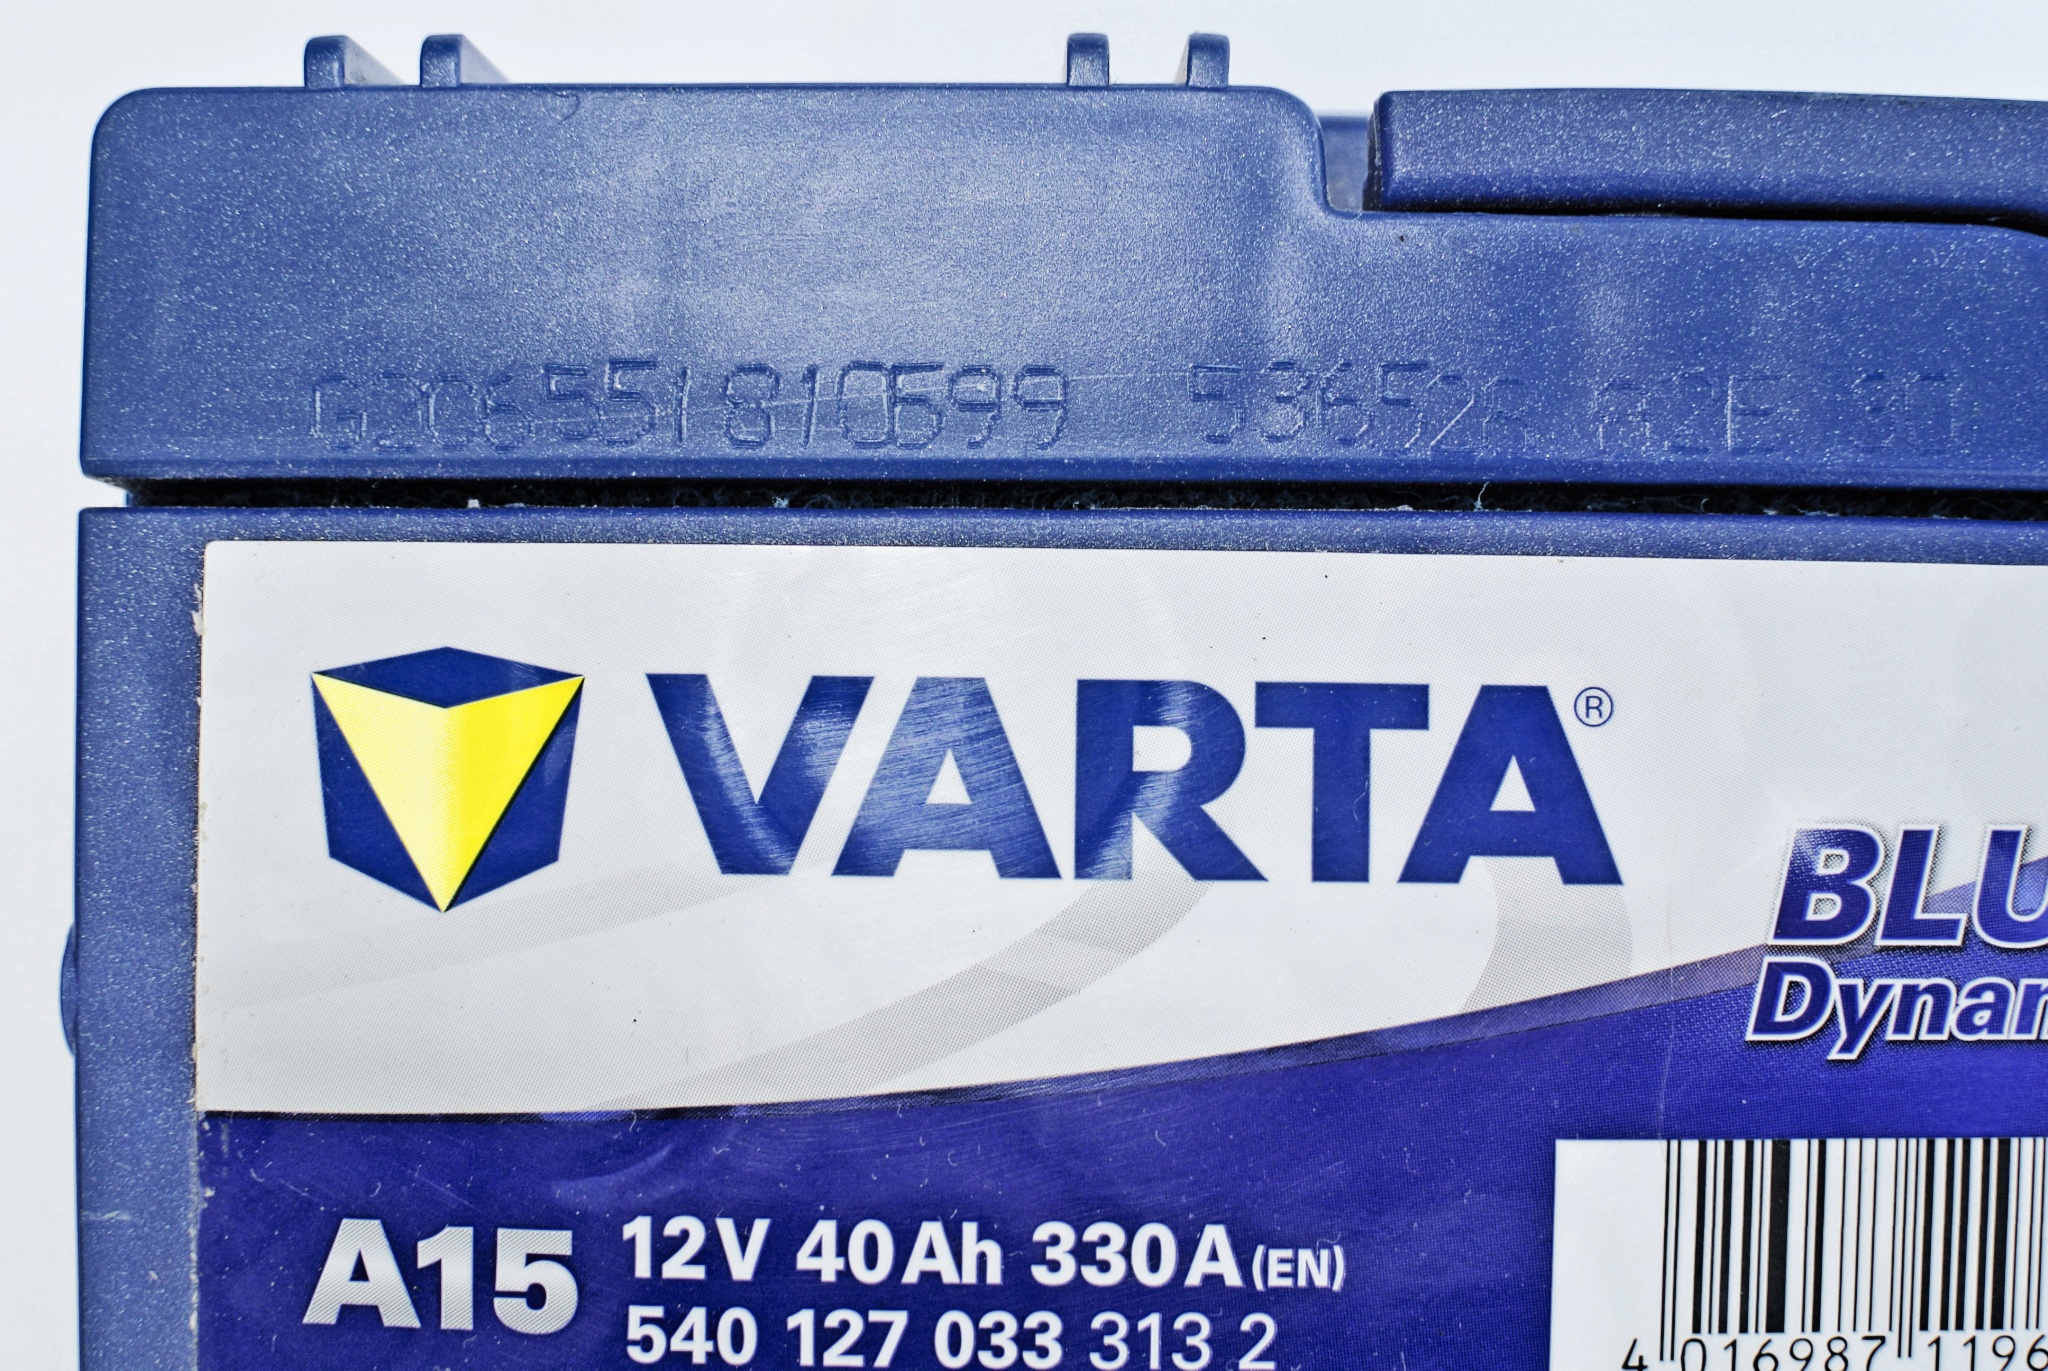 Год изготовления аккумулятора. Аккумулятор Varta Blue Dynamic a15 40ah 330a (540 127 033). Маркировка выпуска батареи варта. АКБ Varta год выпуска маркировка варта. Варта Дата выпуска аккумулятора.